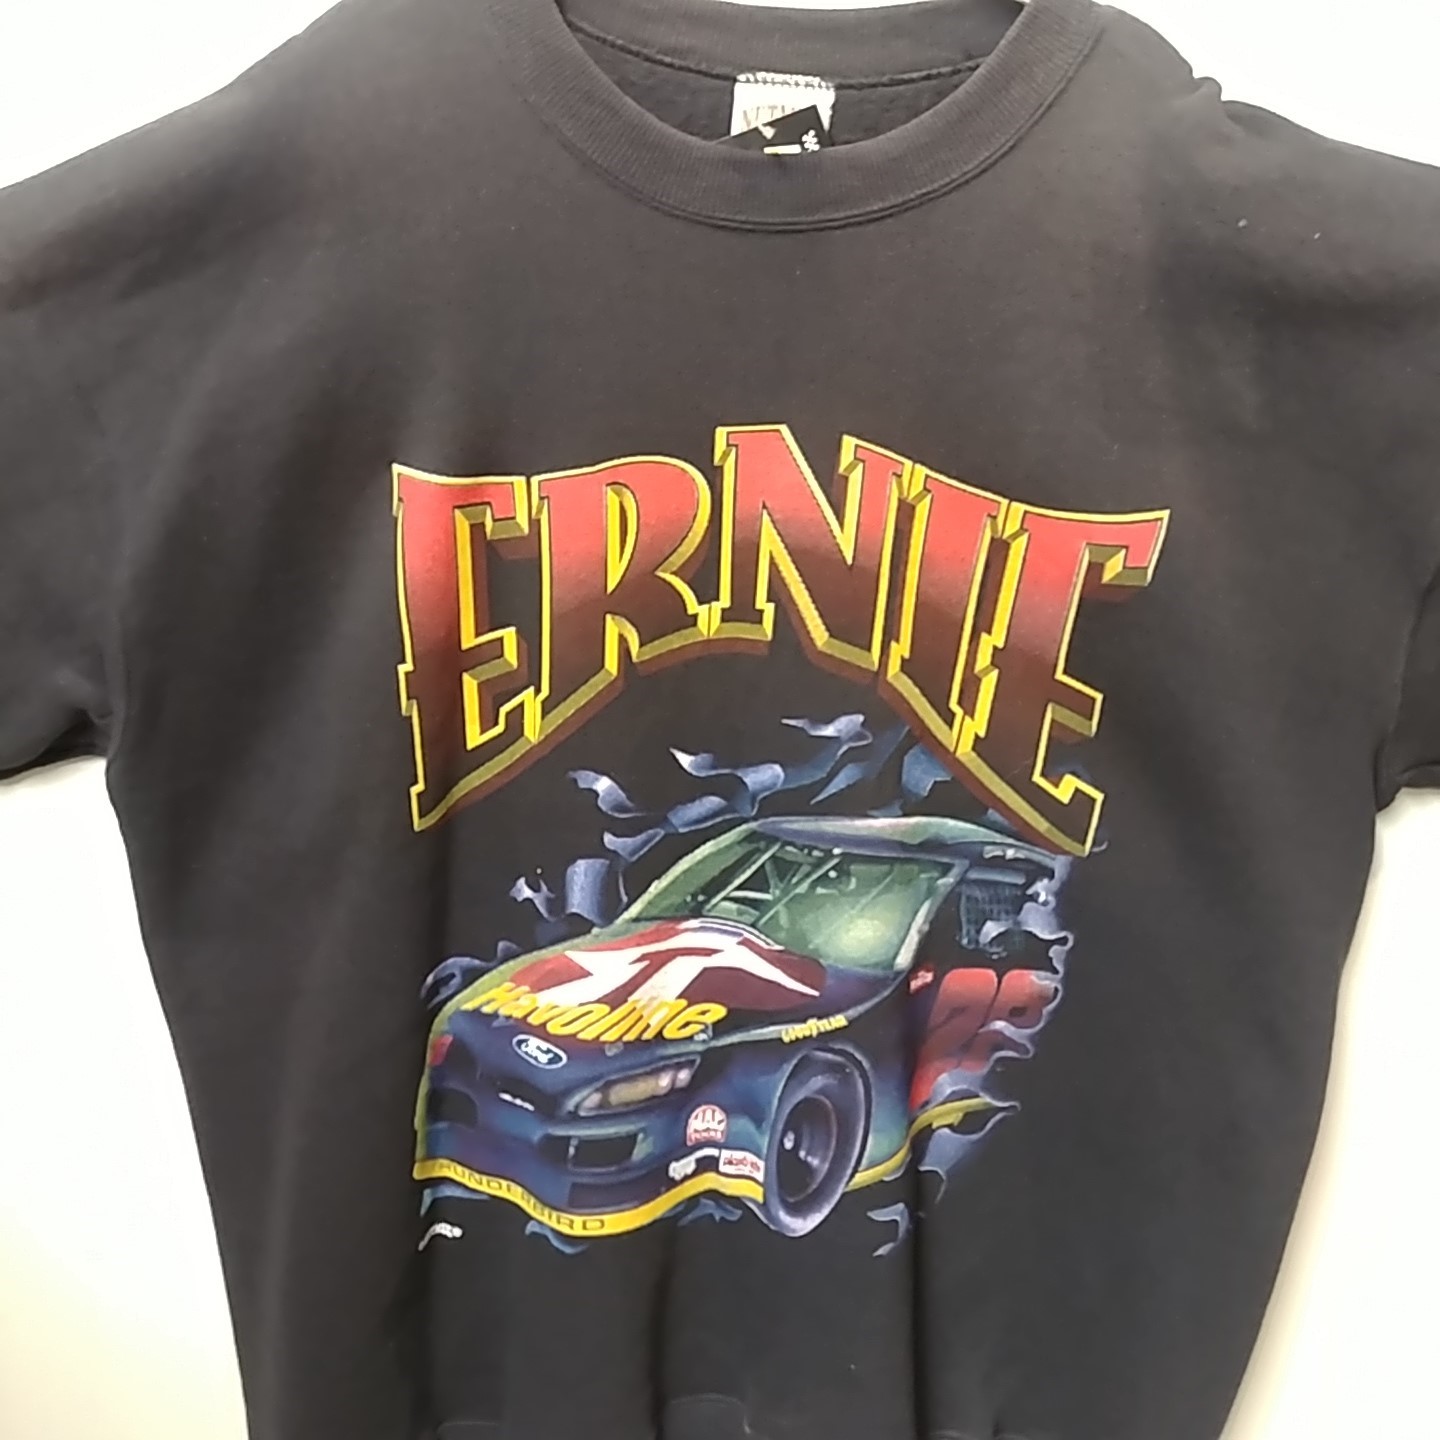 1996 Ernie Irvan Havoline sweatshirt